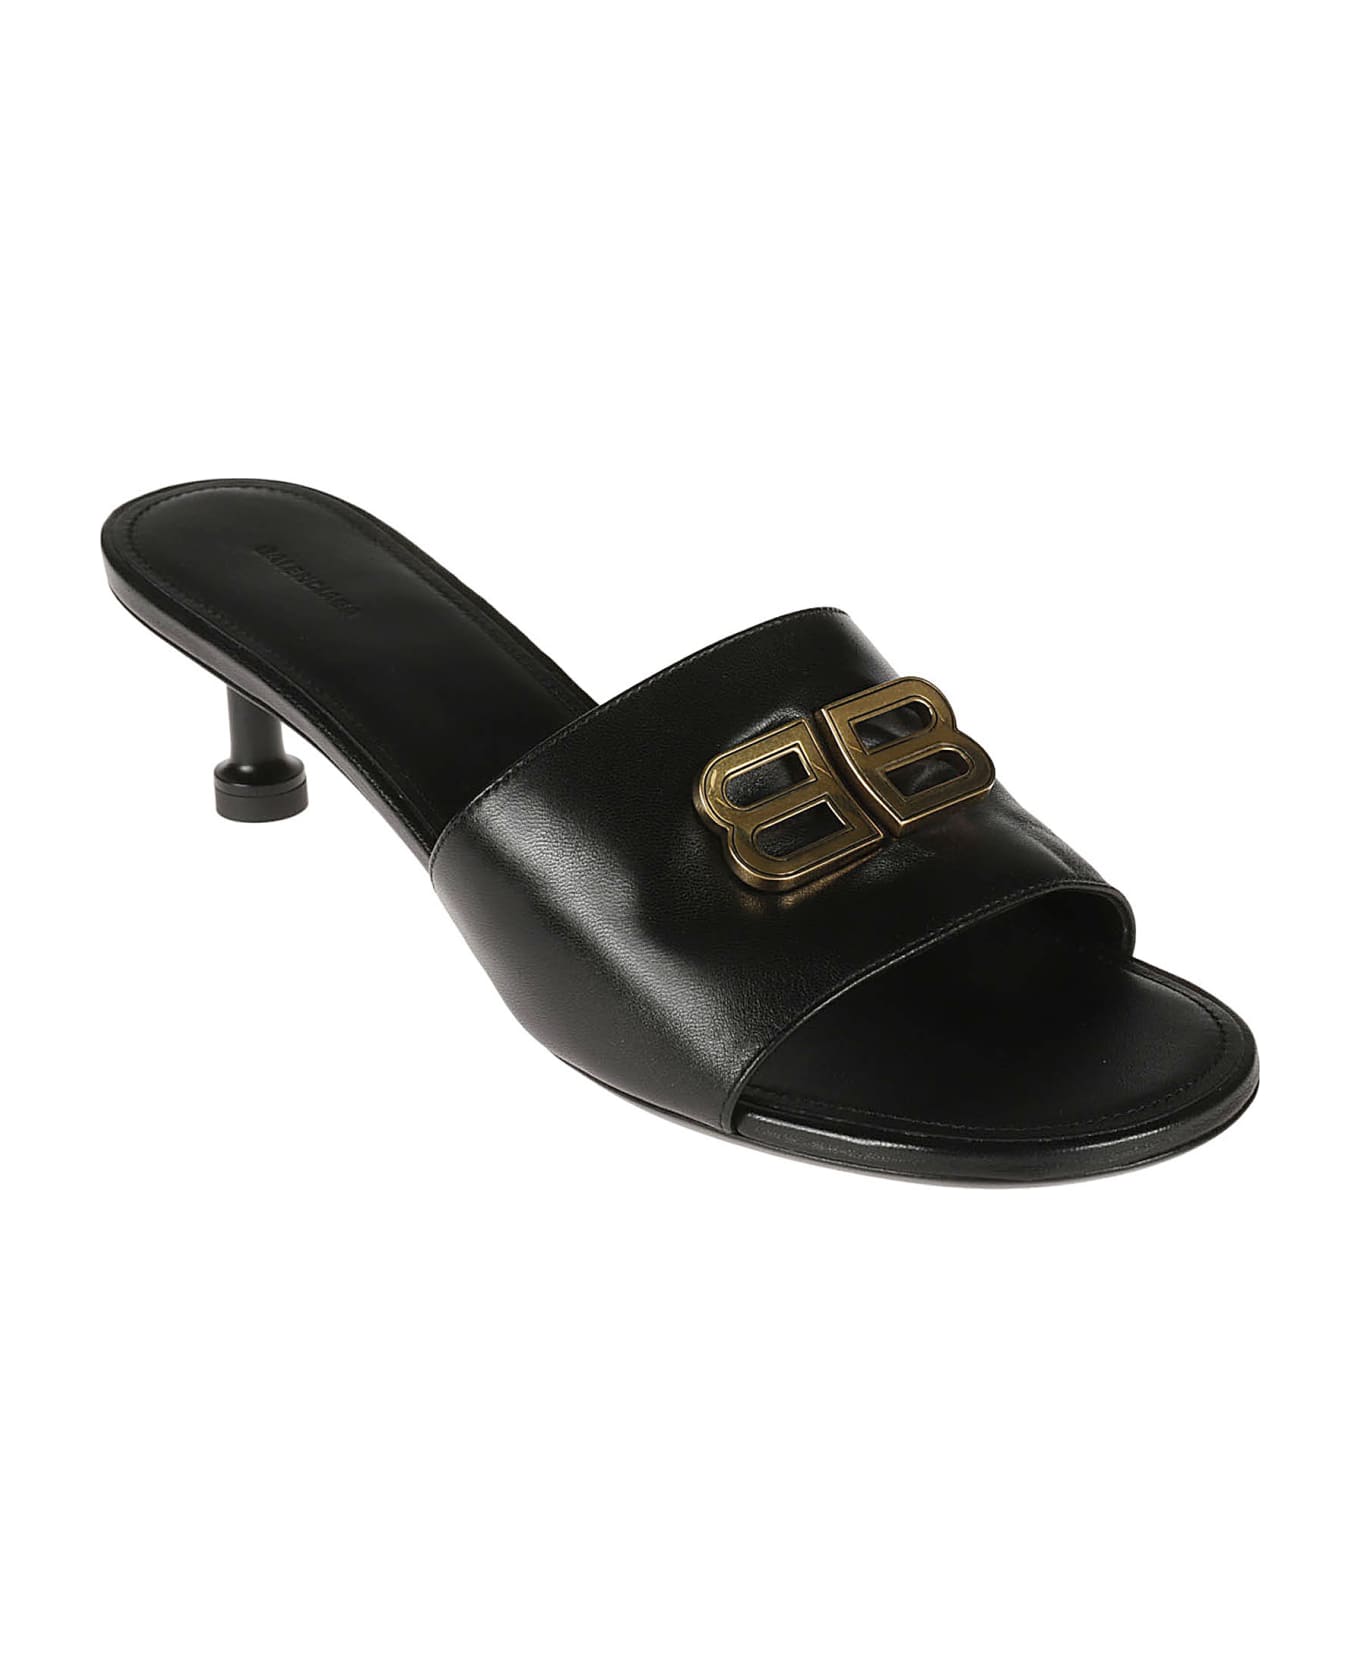 Balenciaga Groupie M50 Sandals - Black/Gold Vintage